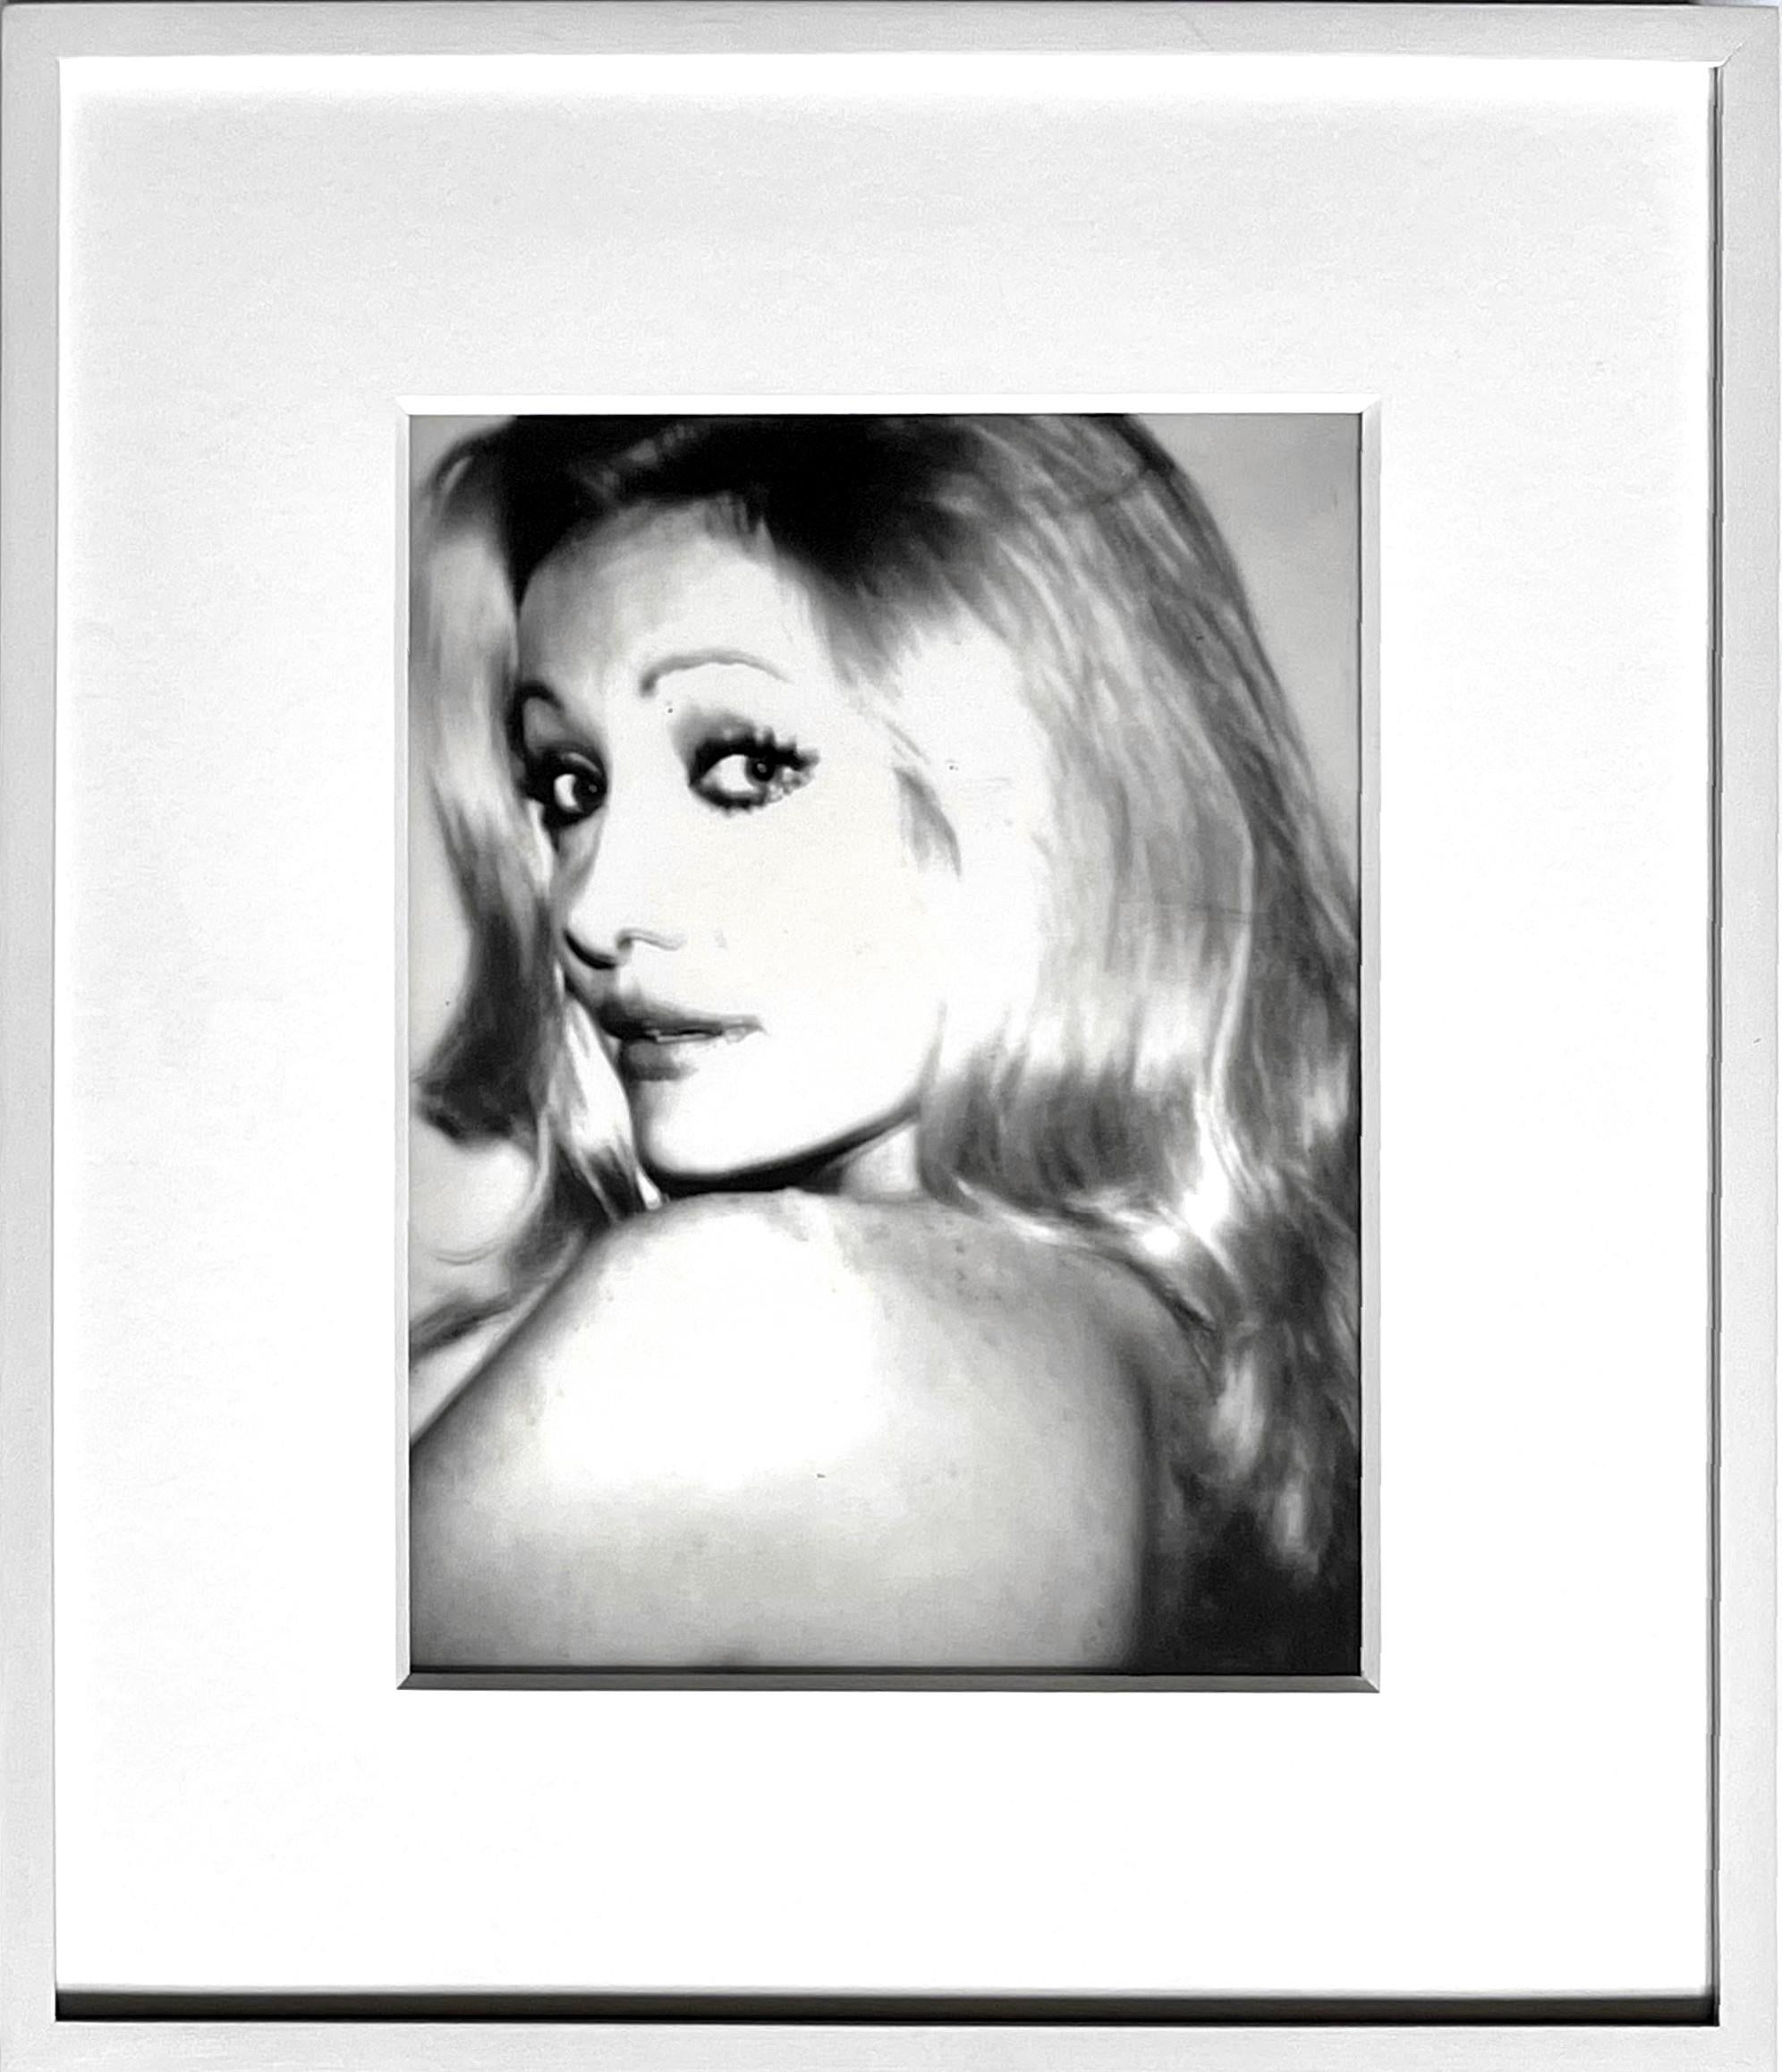 Andy Warhol Portrait Photograph - Baroness de Waldner - unique acetate of Brazilian actress, with provenance 